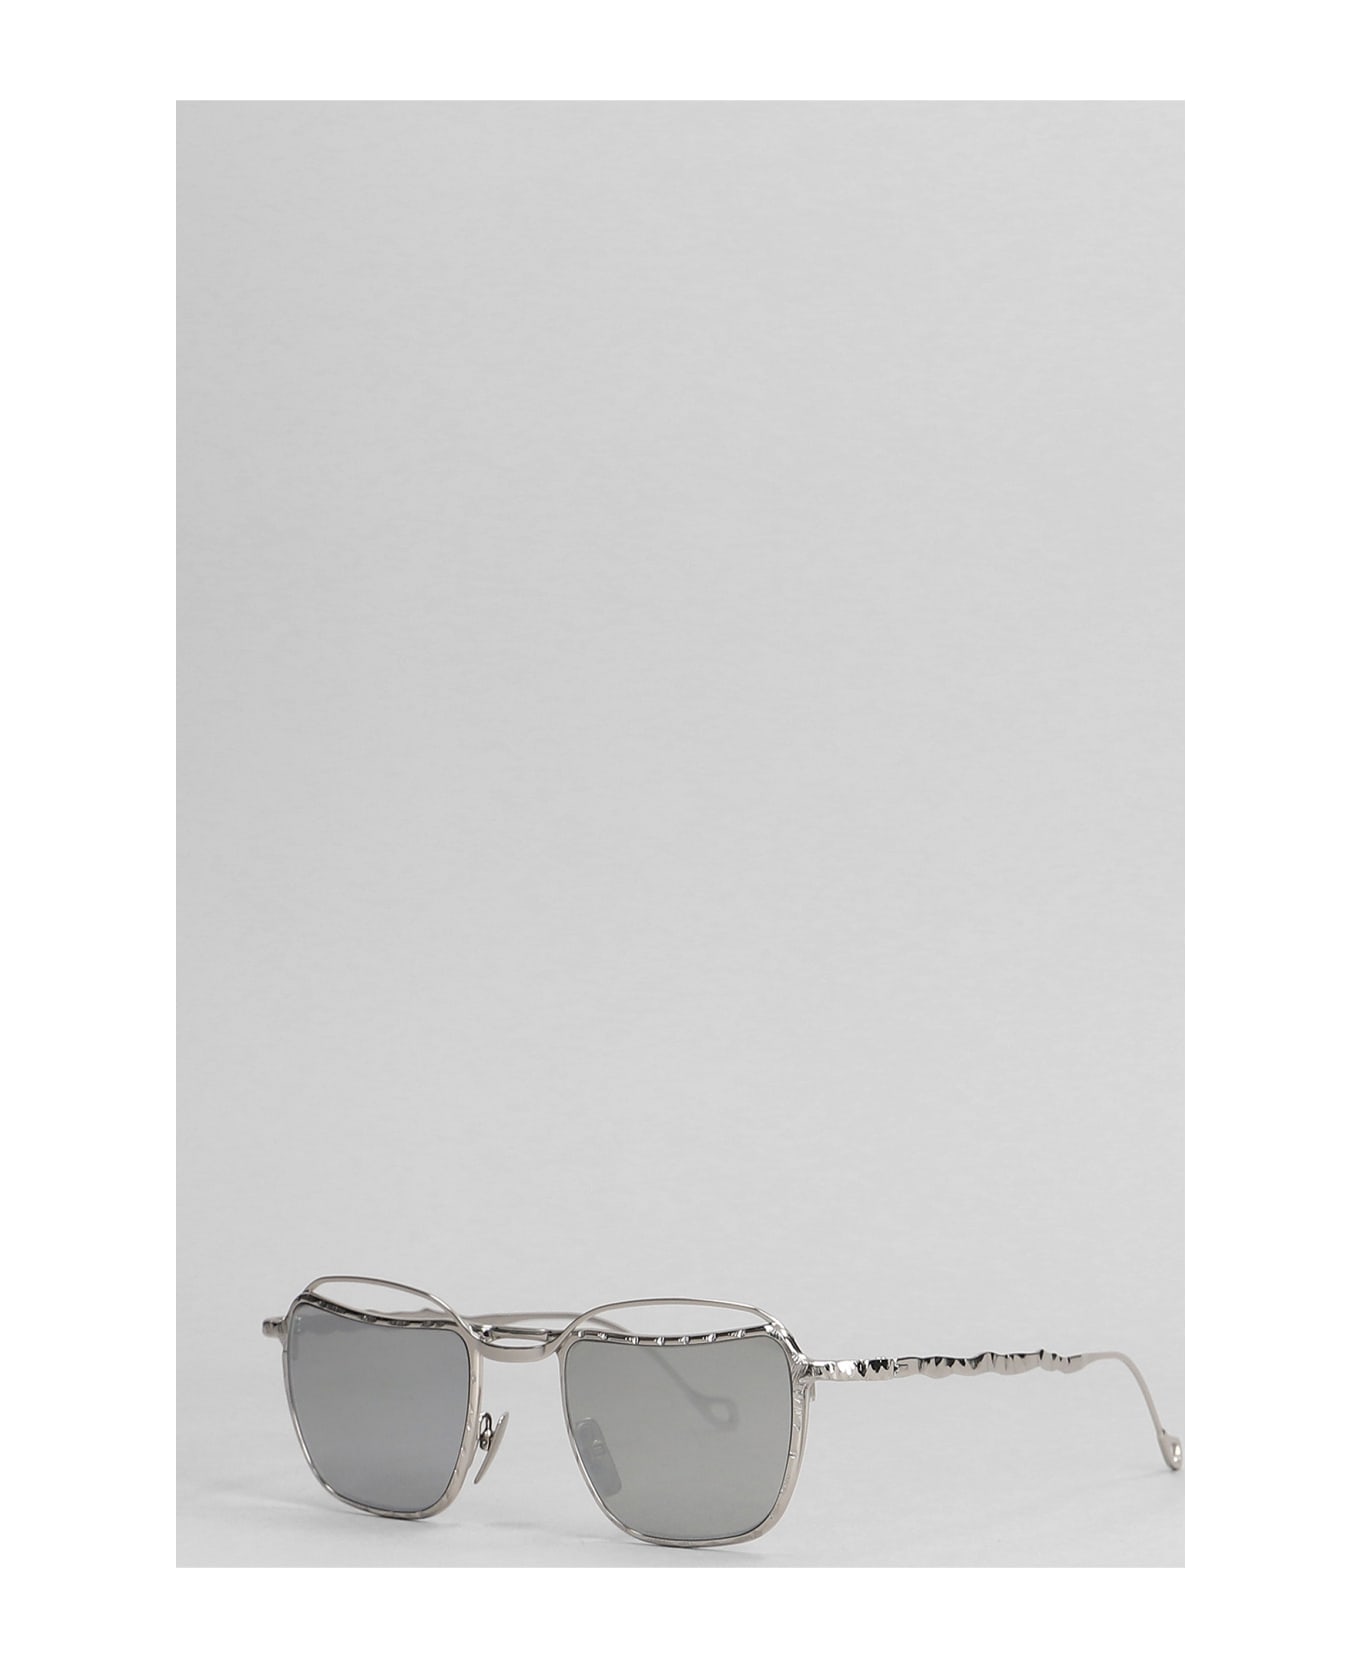 Kuboraum H71 Sunglasses In Silver Metal Alloy - silver